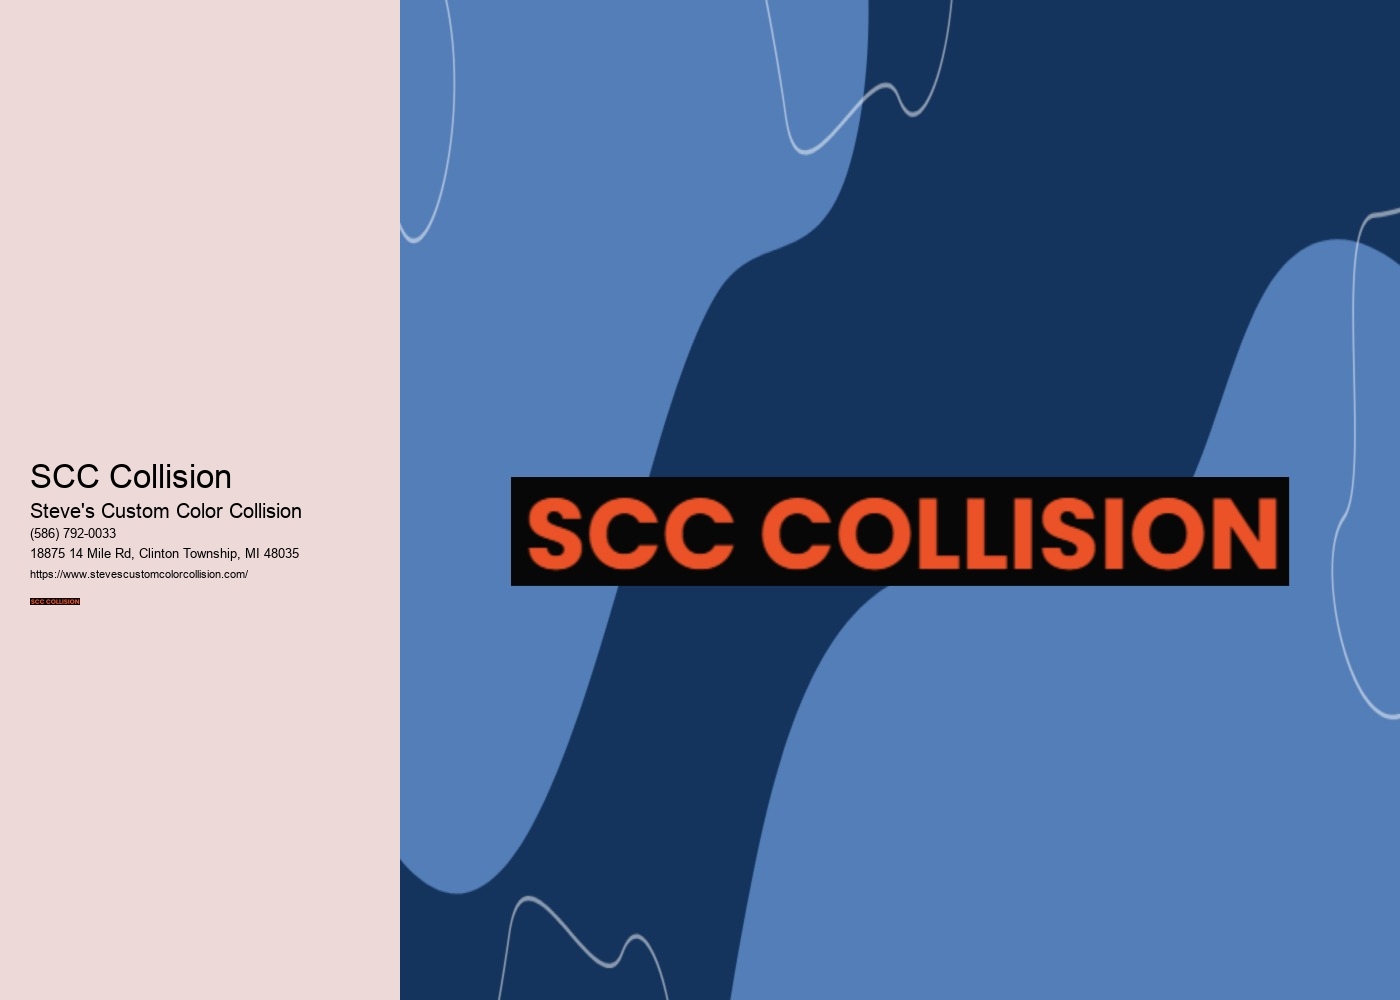 SCC Collision